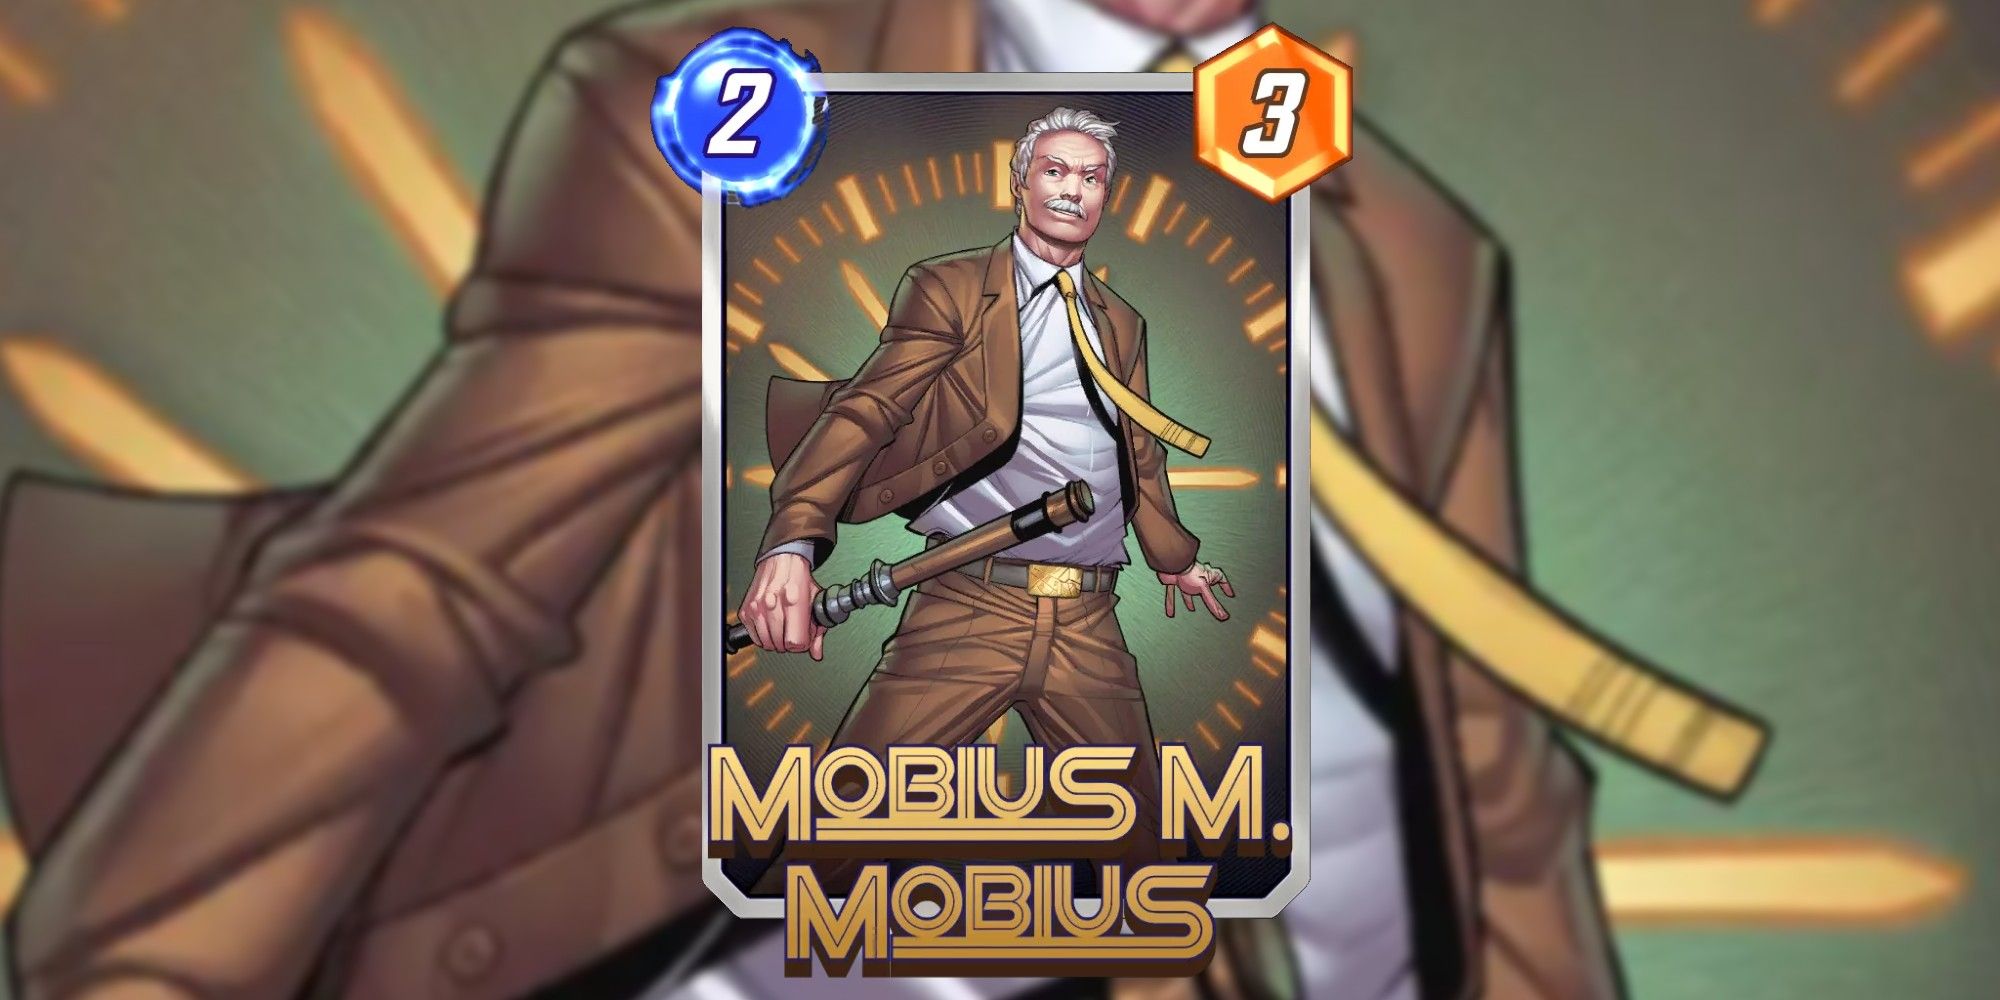 Marvel Snap Card Mobius M. Mobius